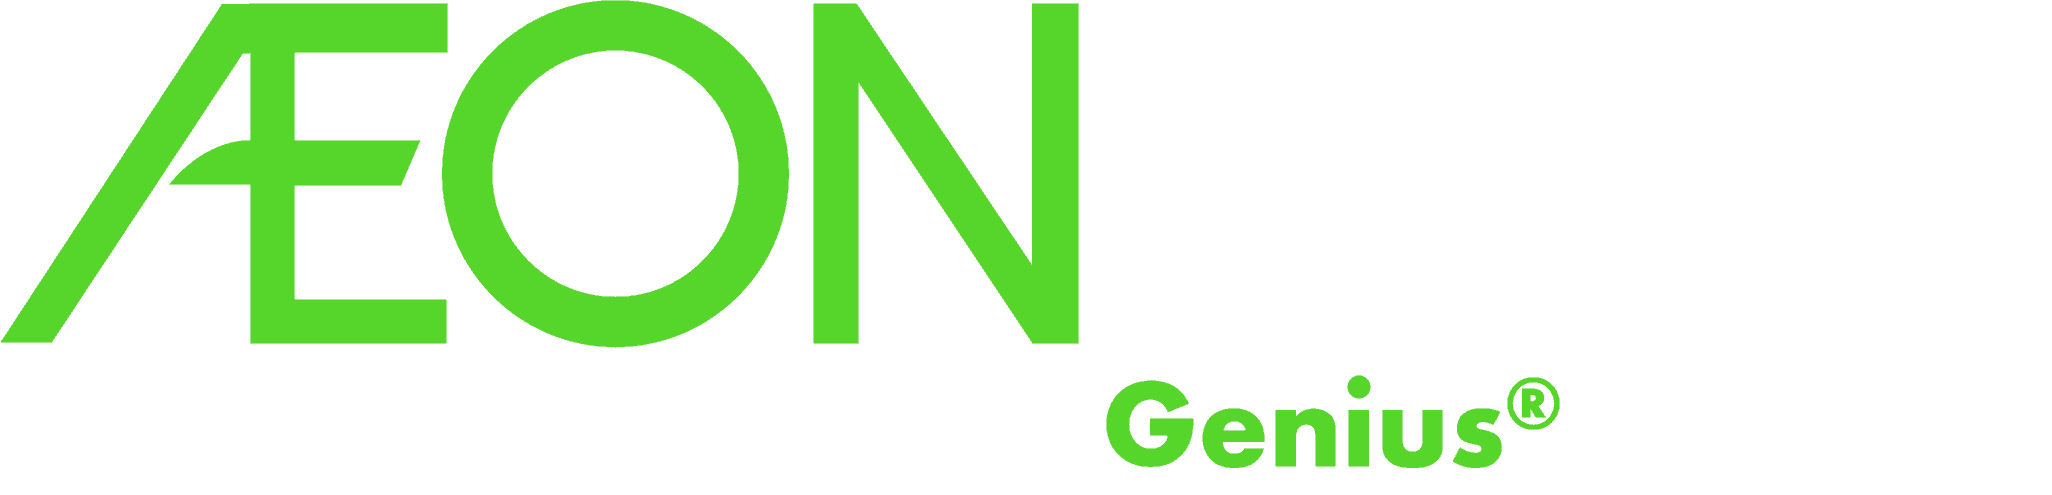 AEON Law logo reverse transparent